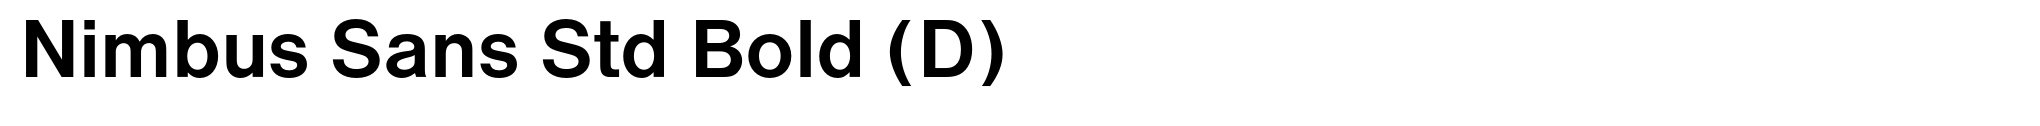 Nimbus Sans Std Bold (D) image